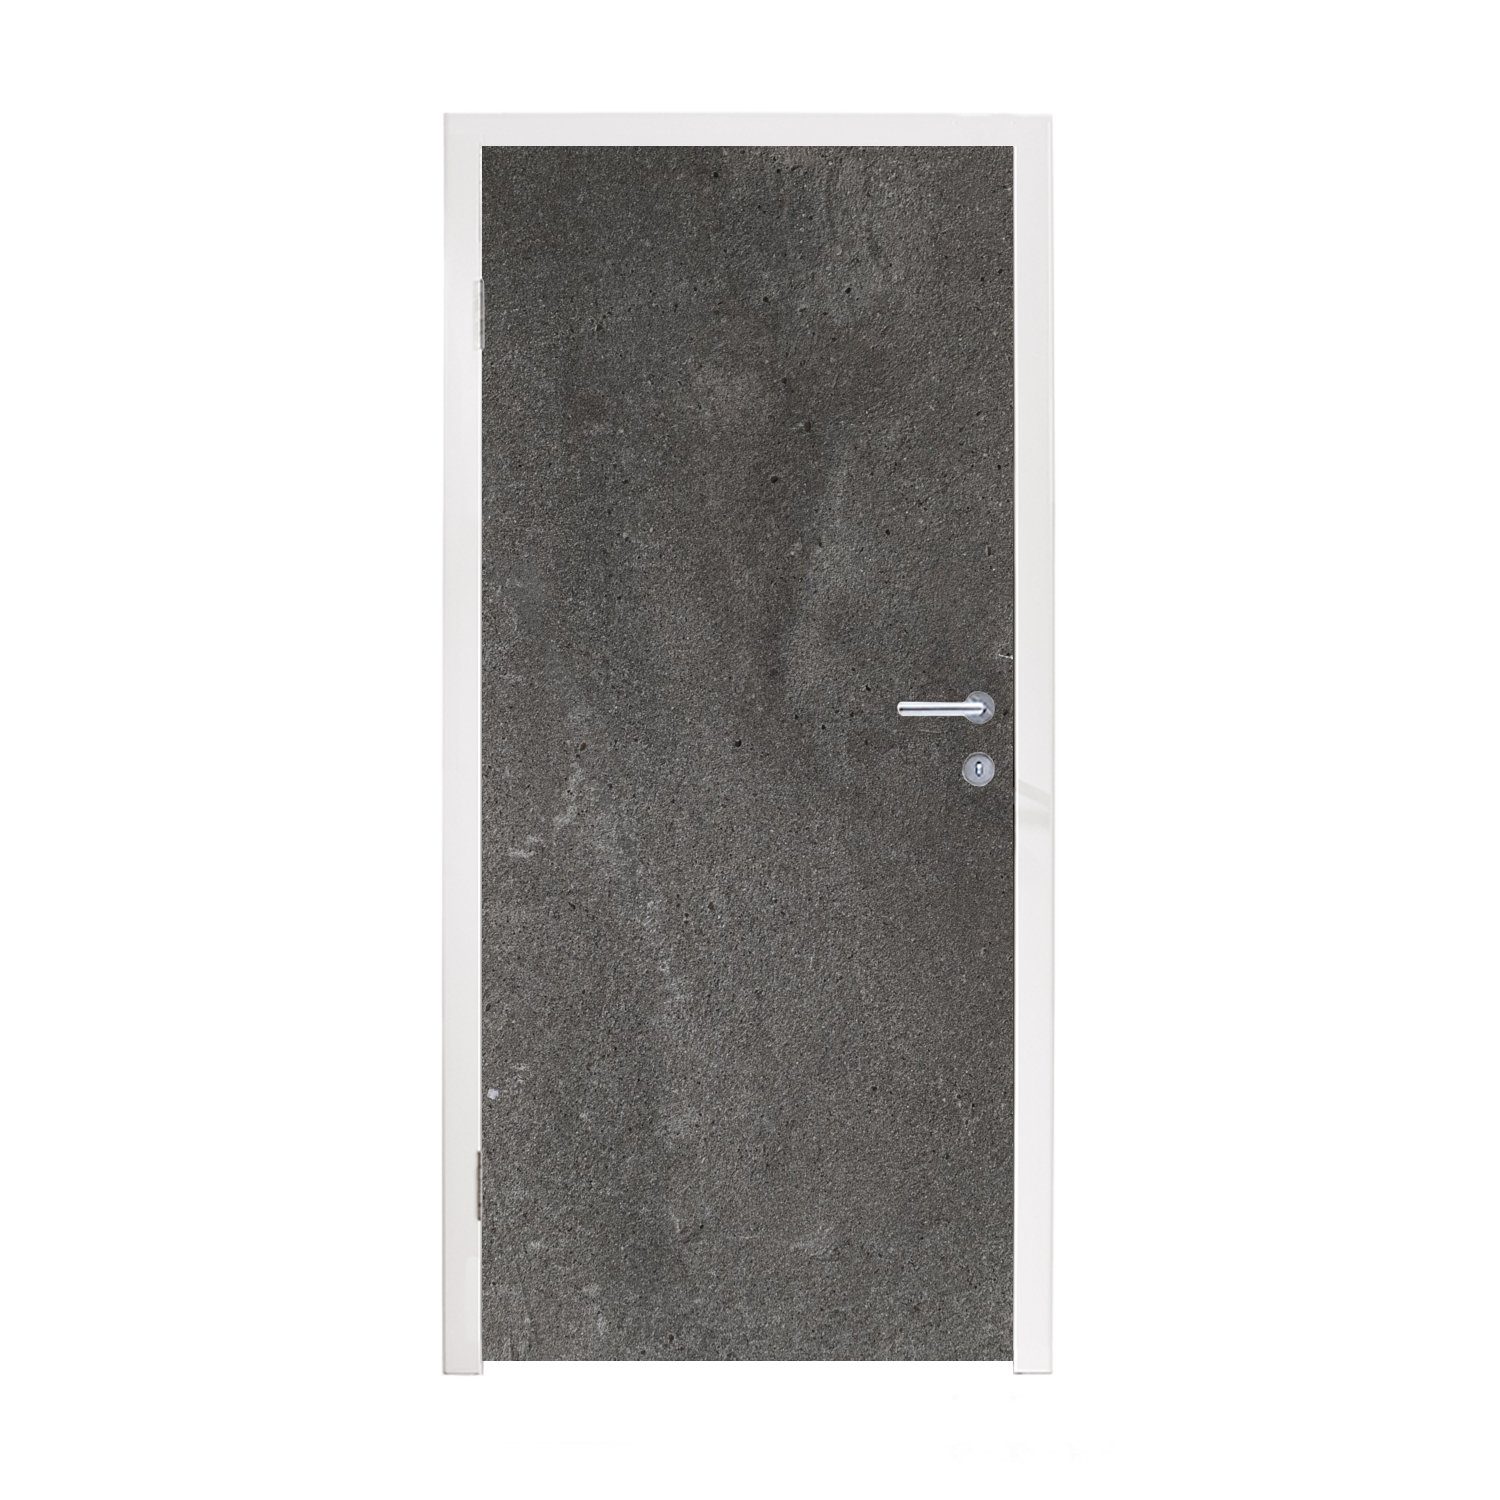 MuchoWow Türtapete Beton - Grau - Wand - Zement, Matt, bedruckt, (1 St), Fototapete für Tür, Türaufkleber, 75x205 cm